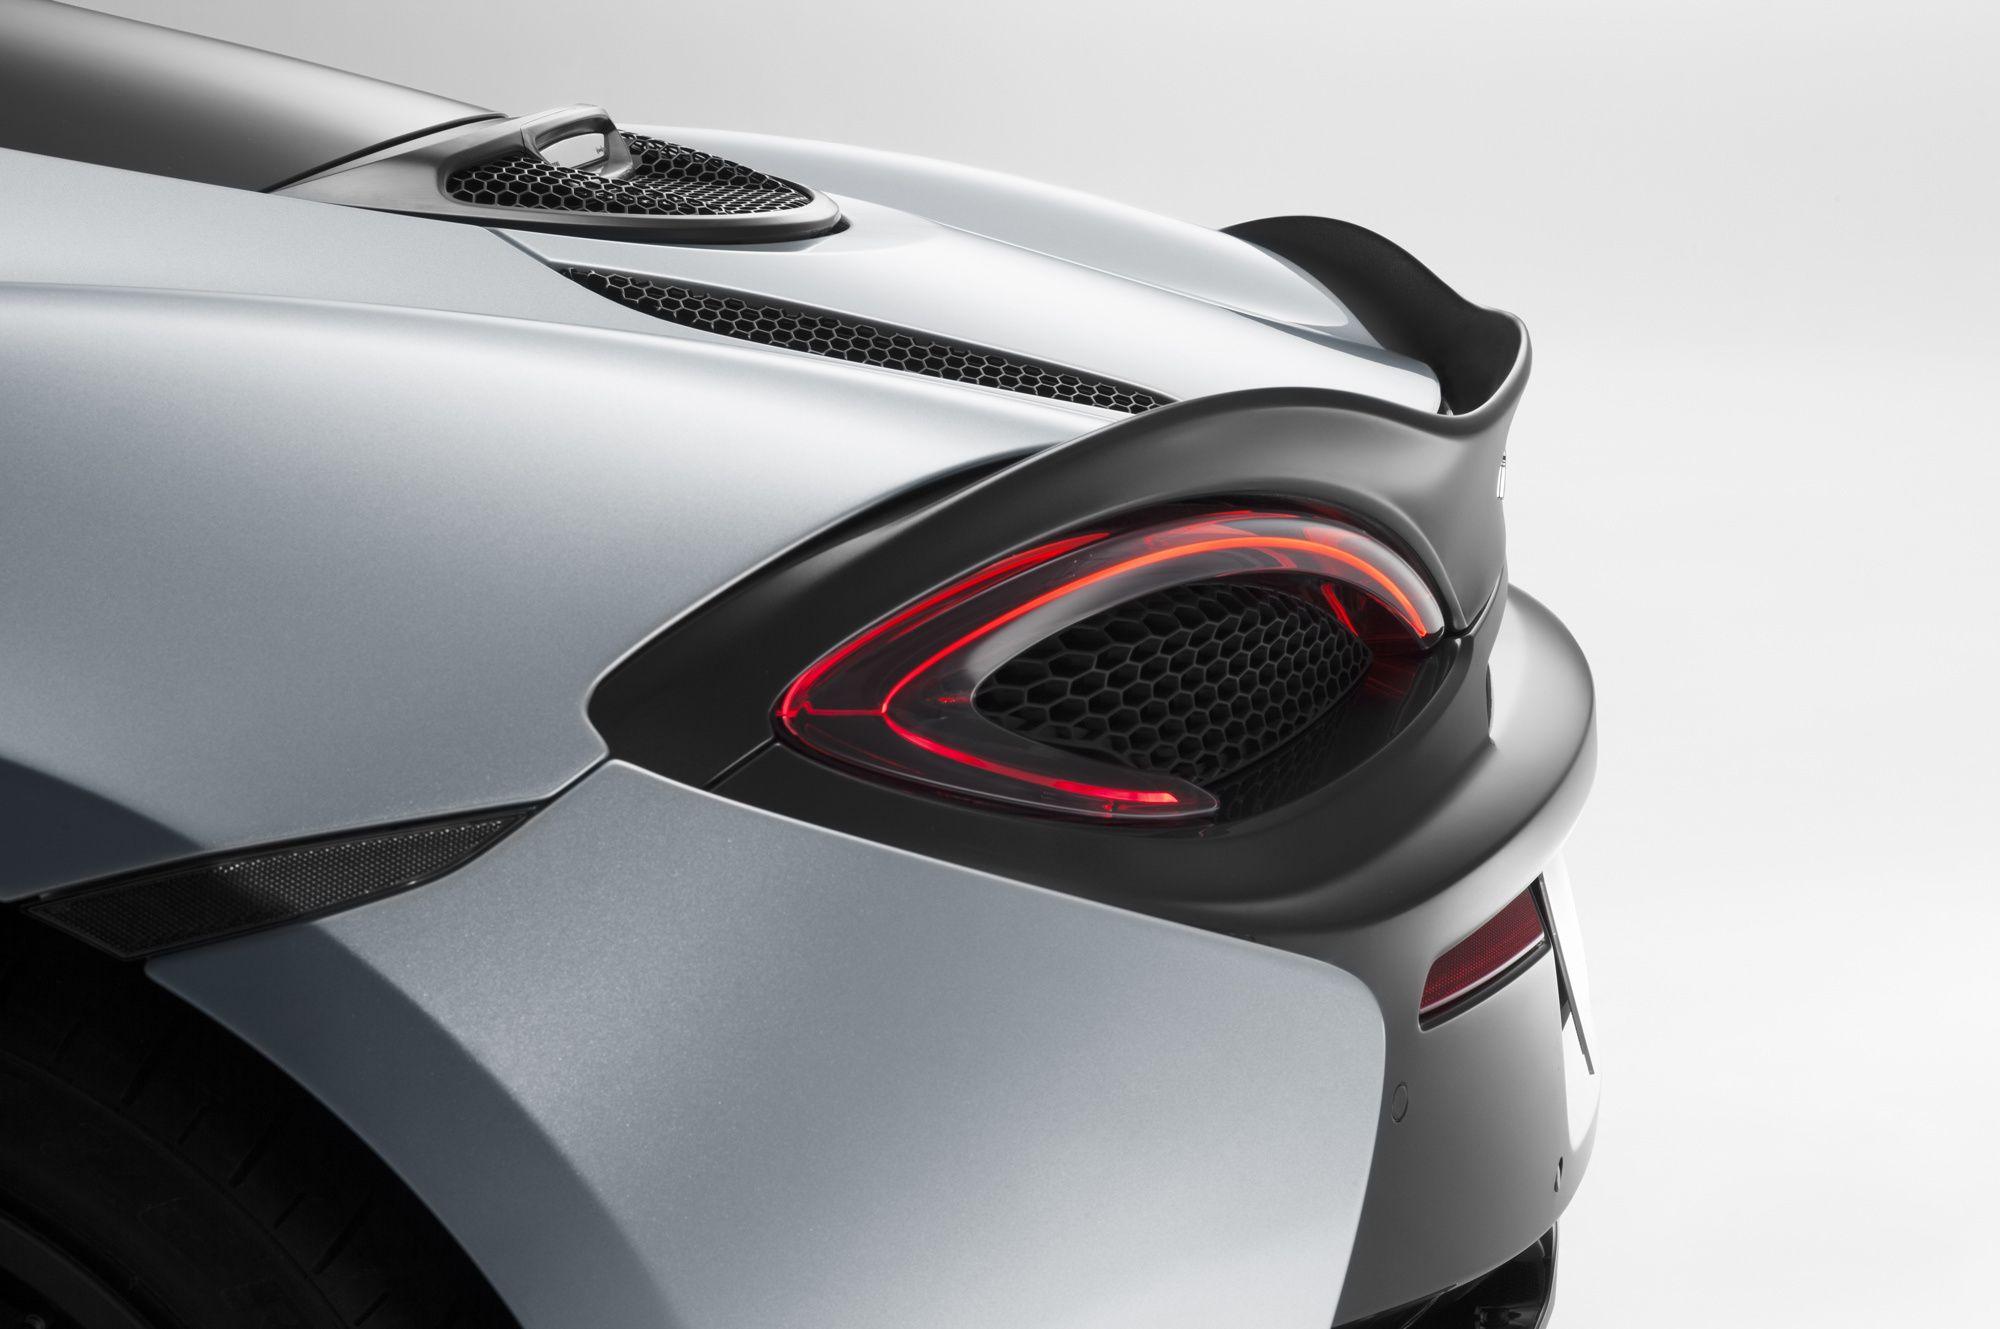 McLaren 570GT Wallpaper Image Photo Picture Background